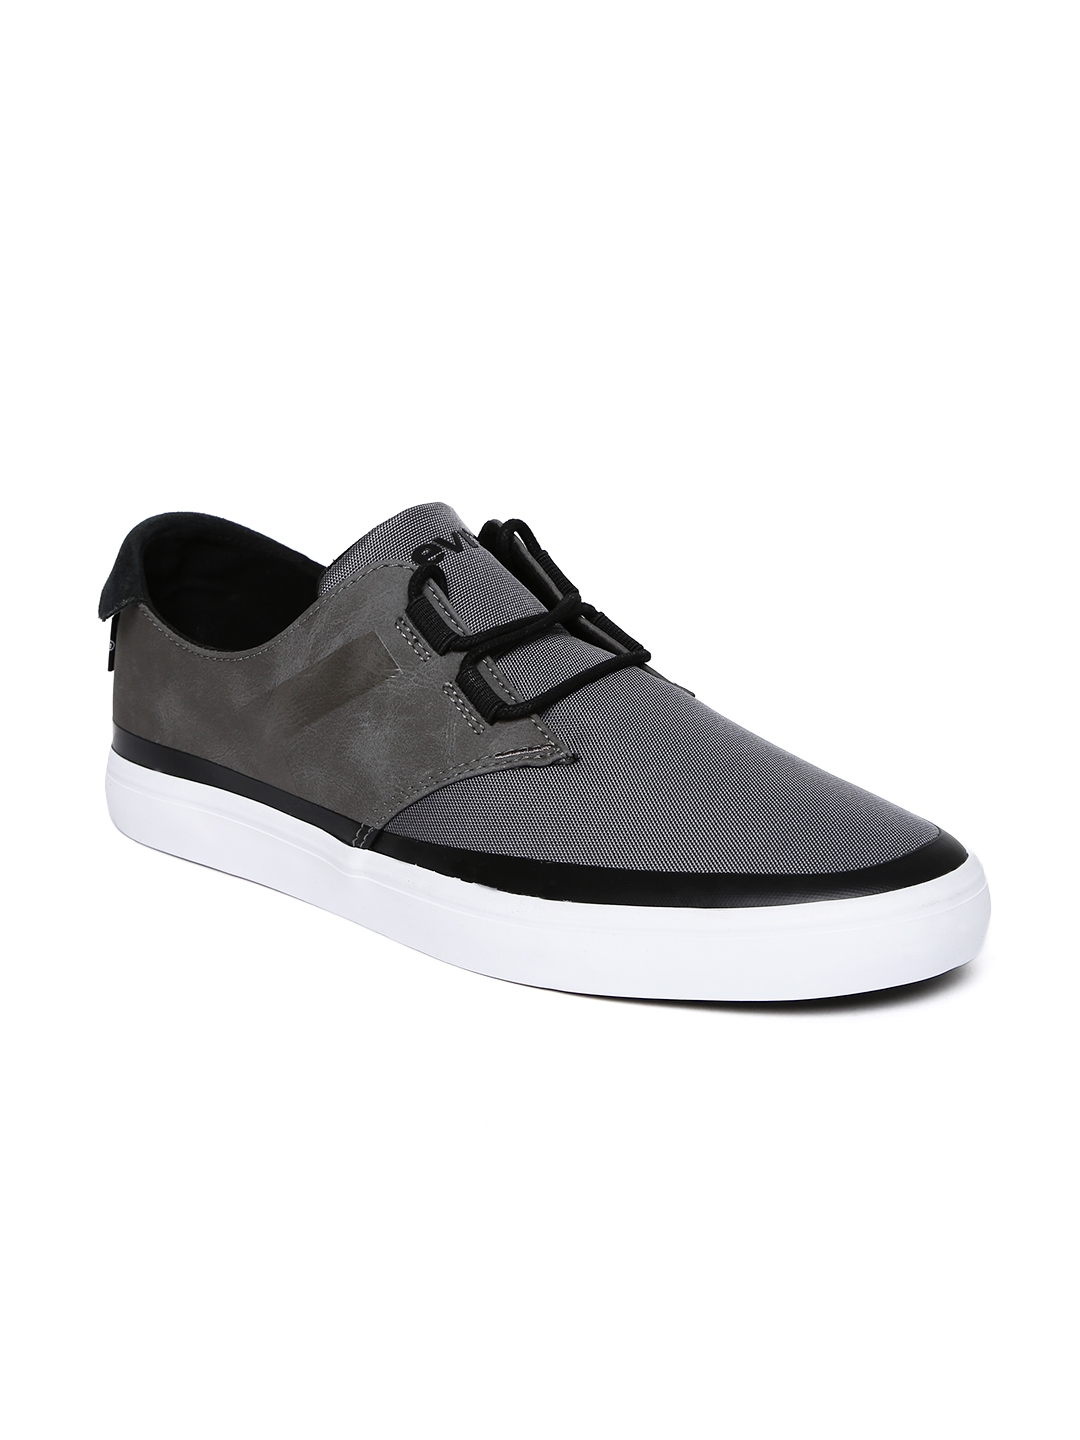 Buy Levis Men Grey Sneakers - Casual Shoes for Men 2042615 | Myntra